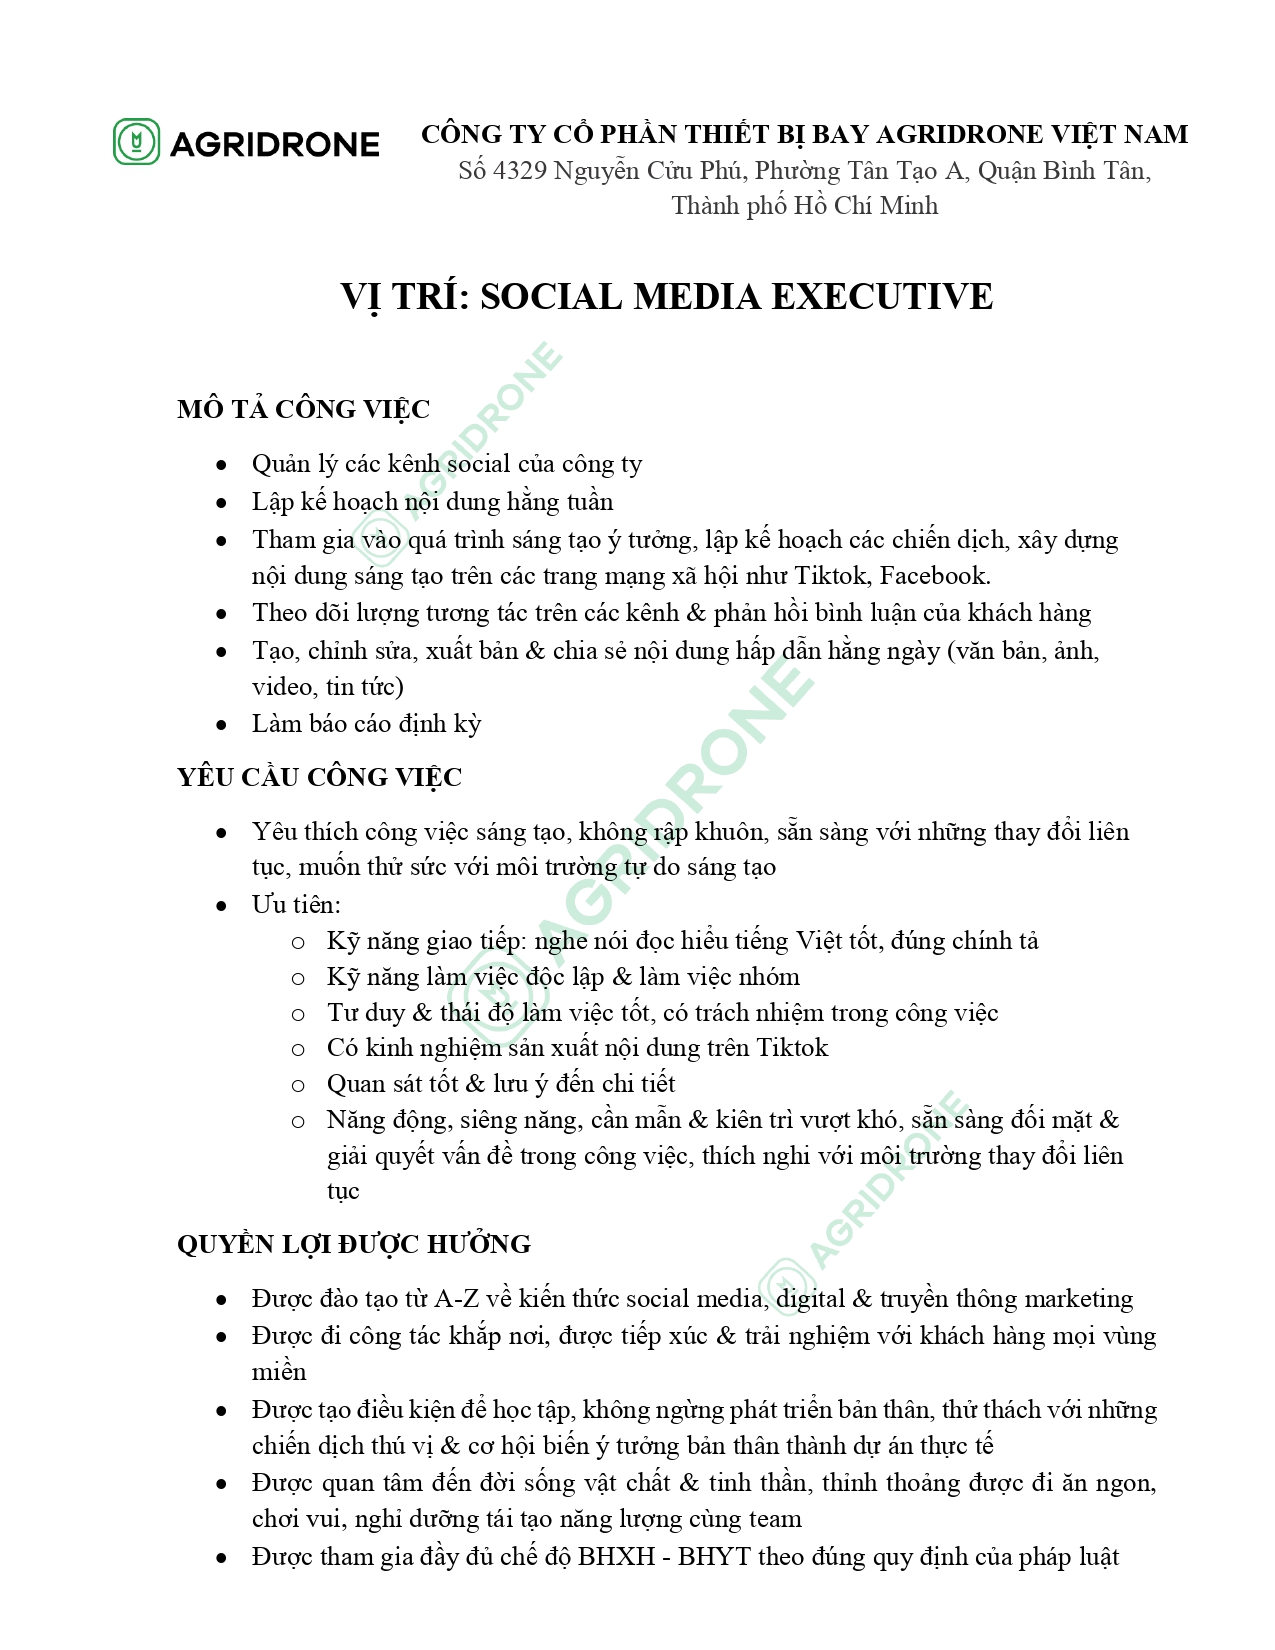 MTCV SOCIAL MEDIA EXECUTIVE PUBLIC page 0001